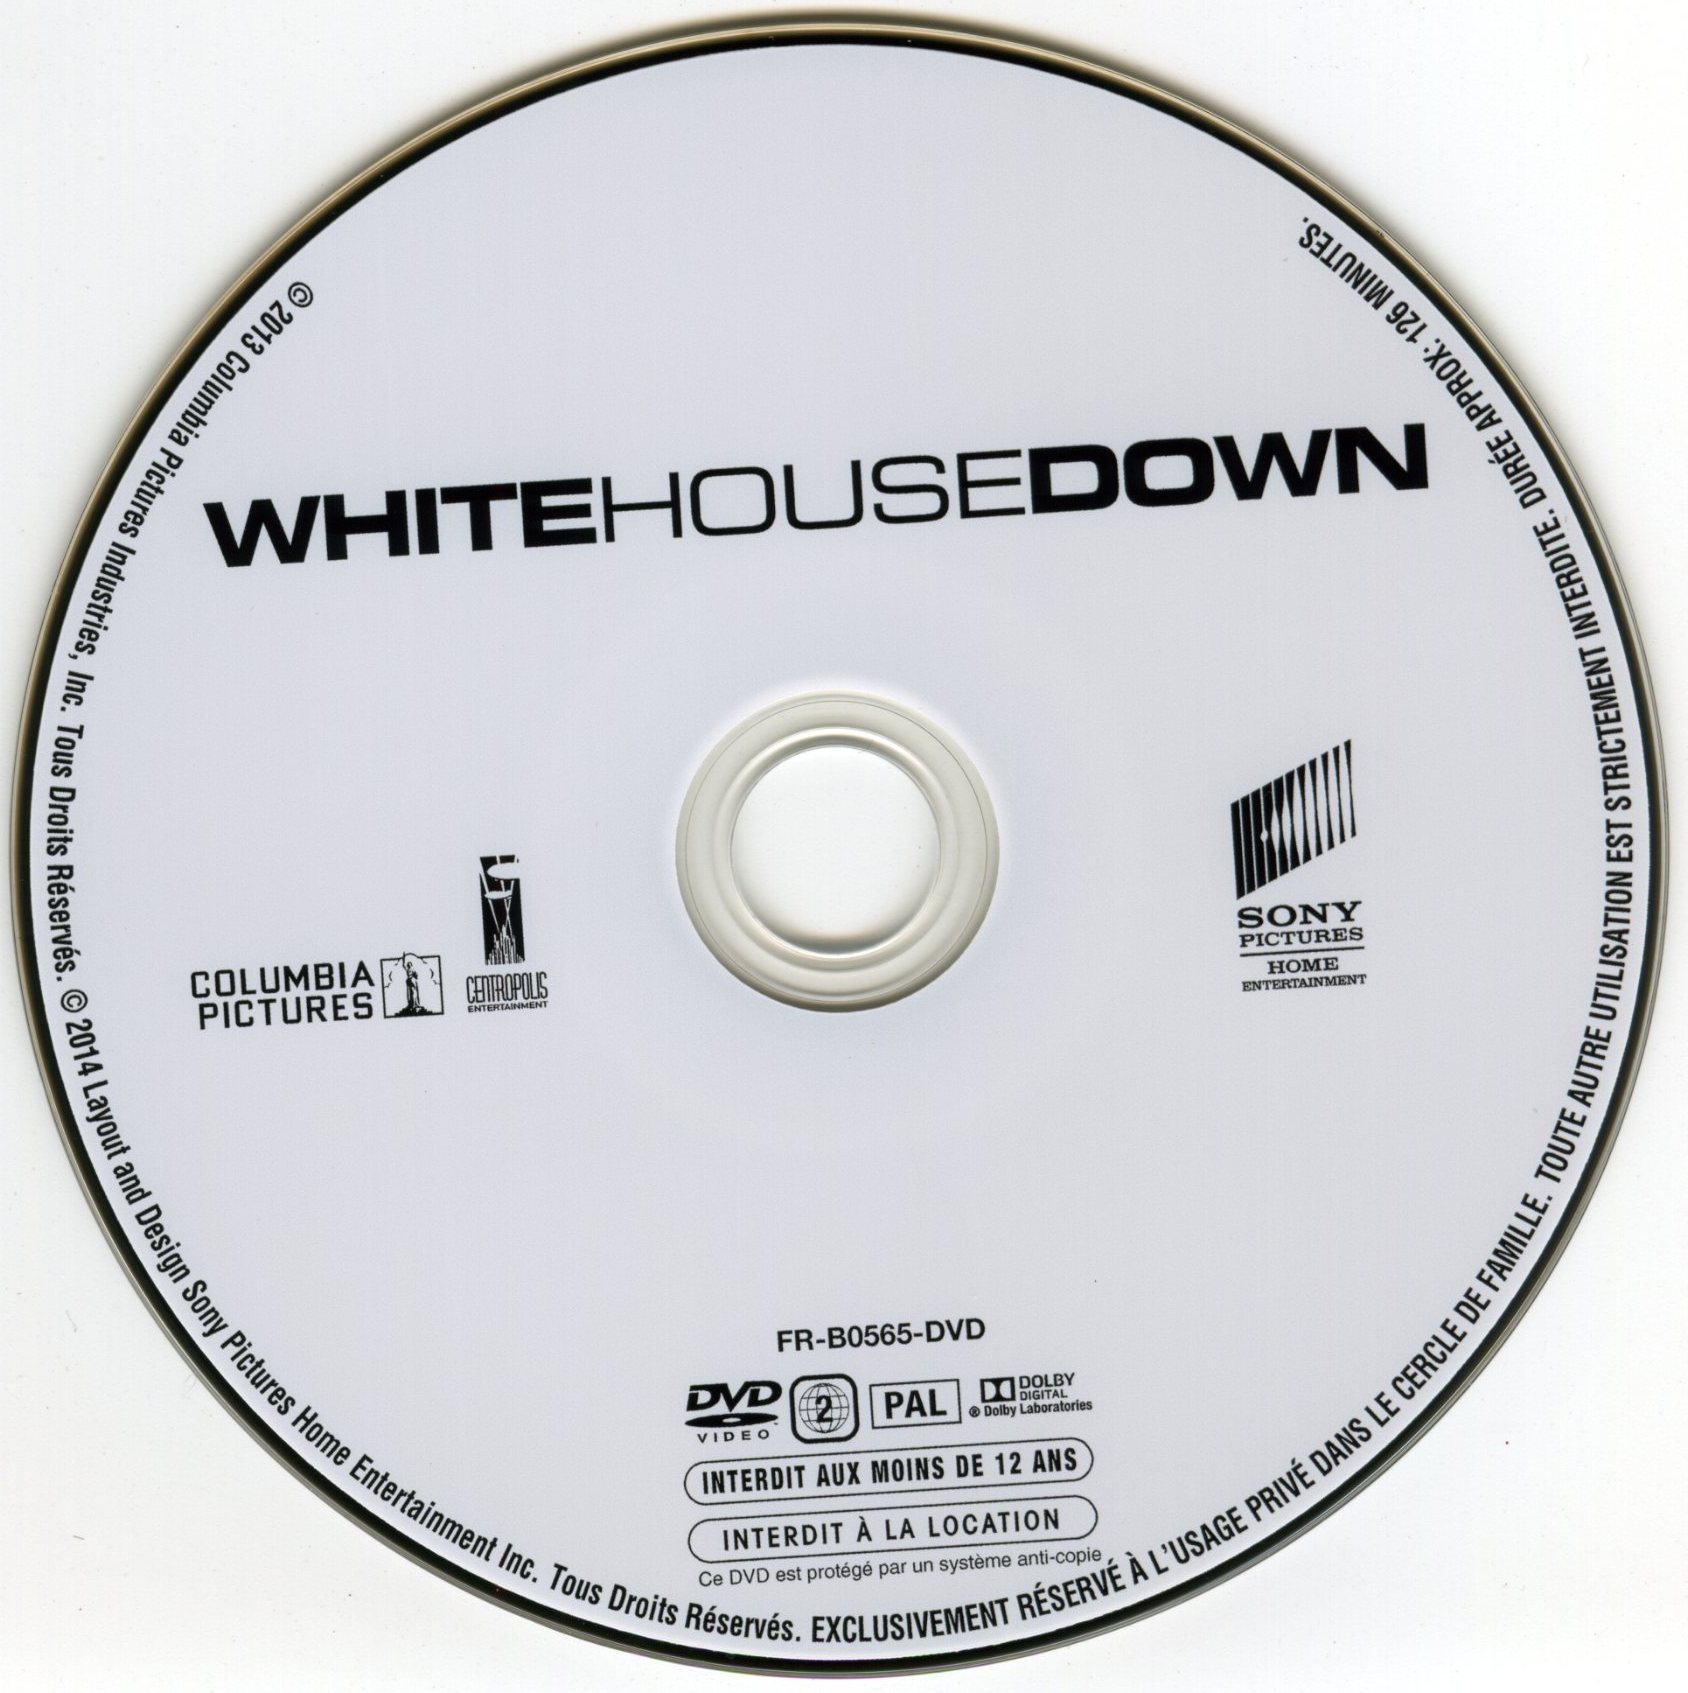 White House Down